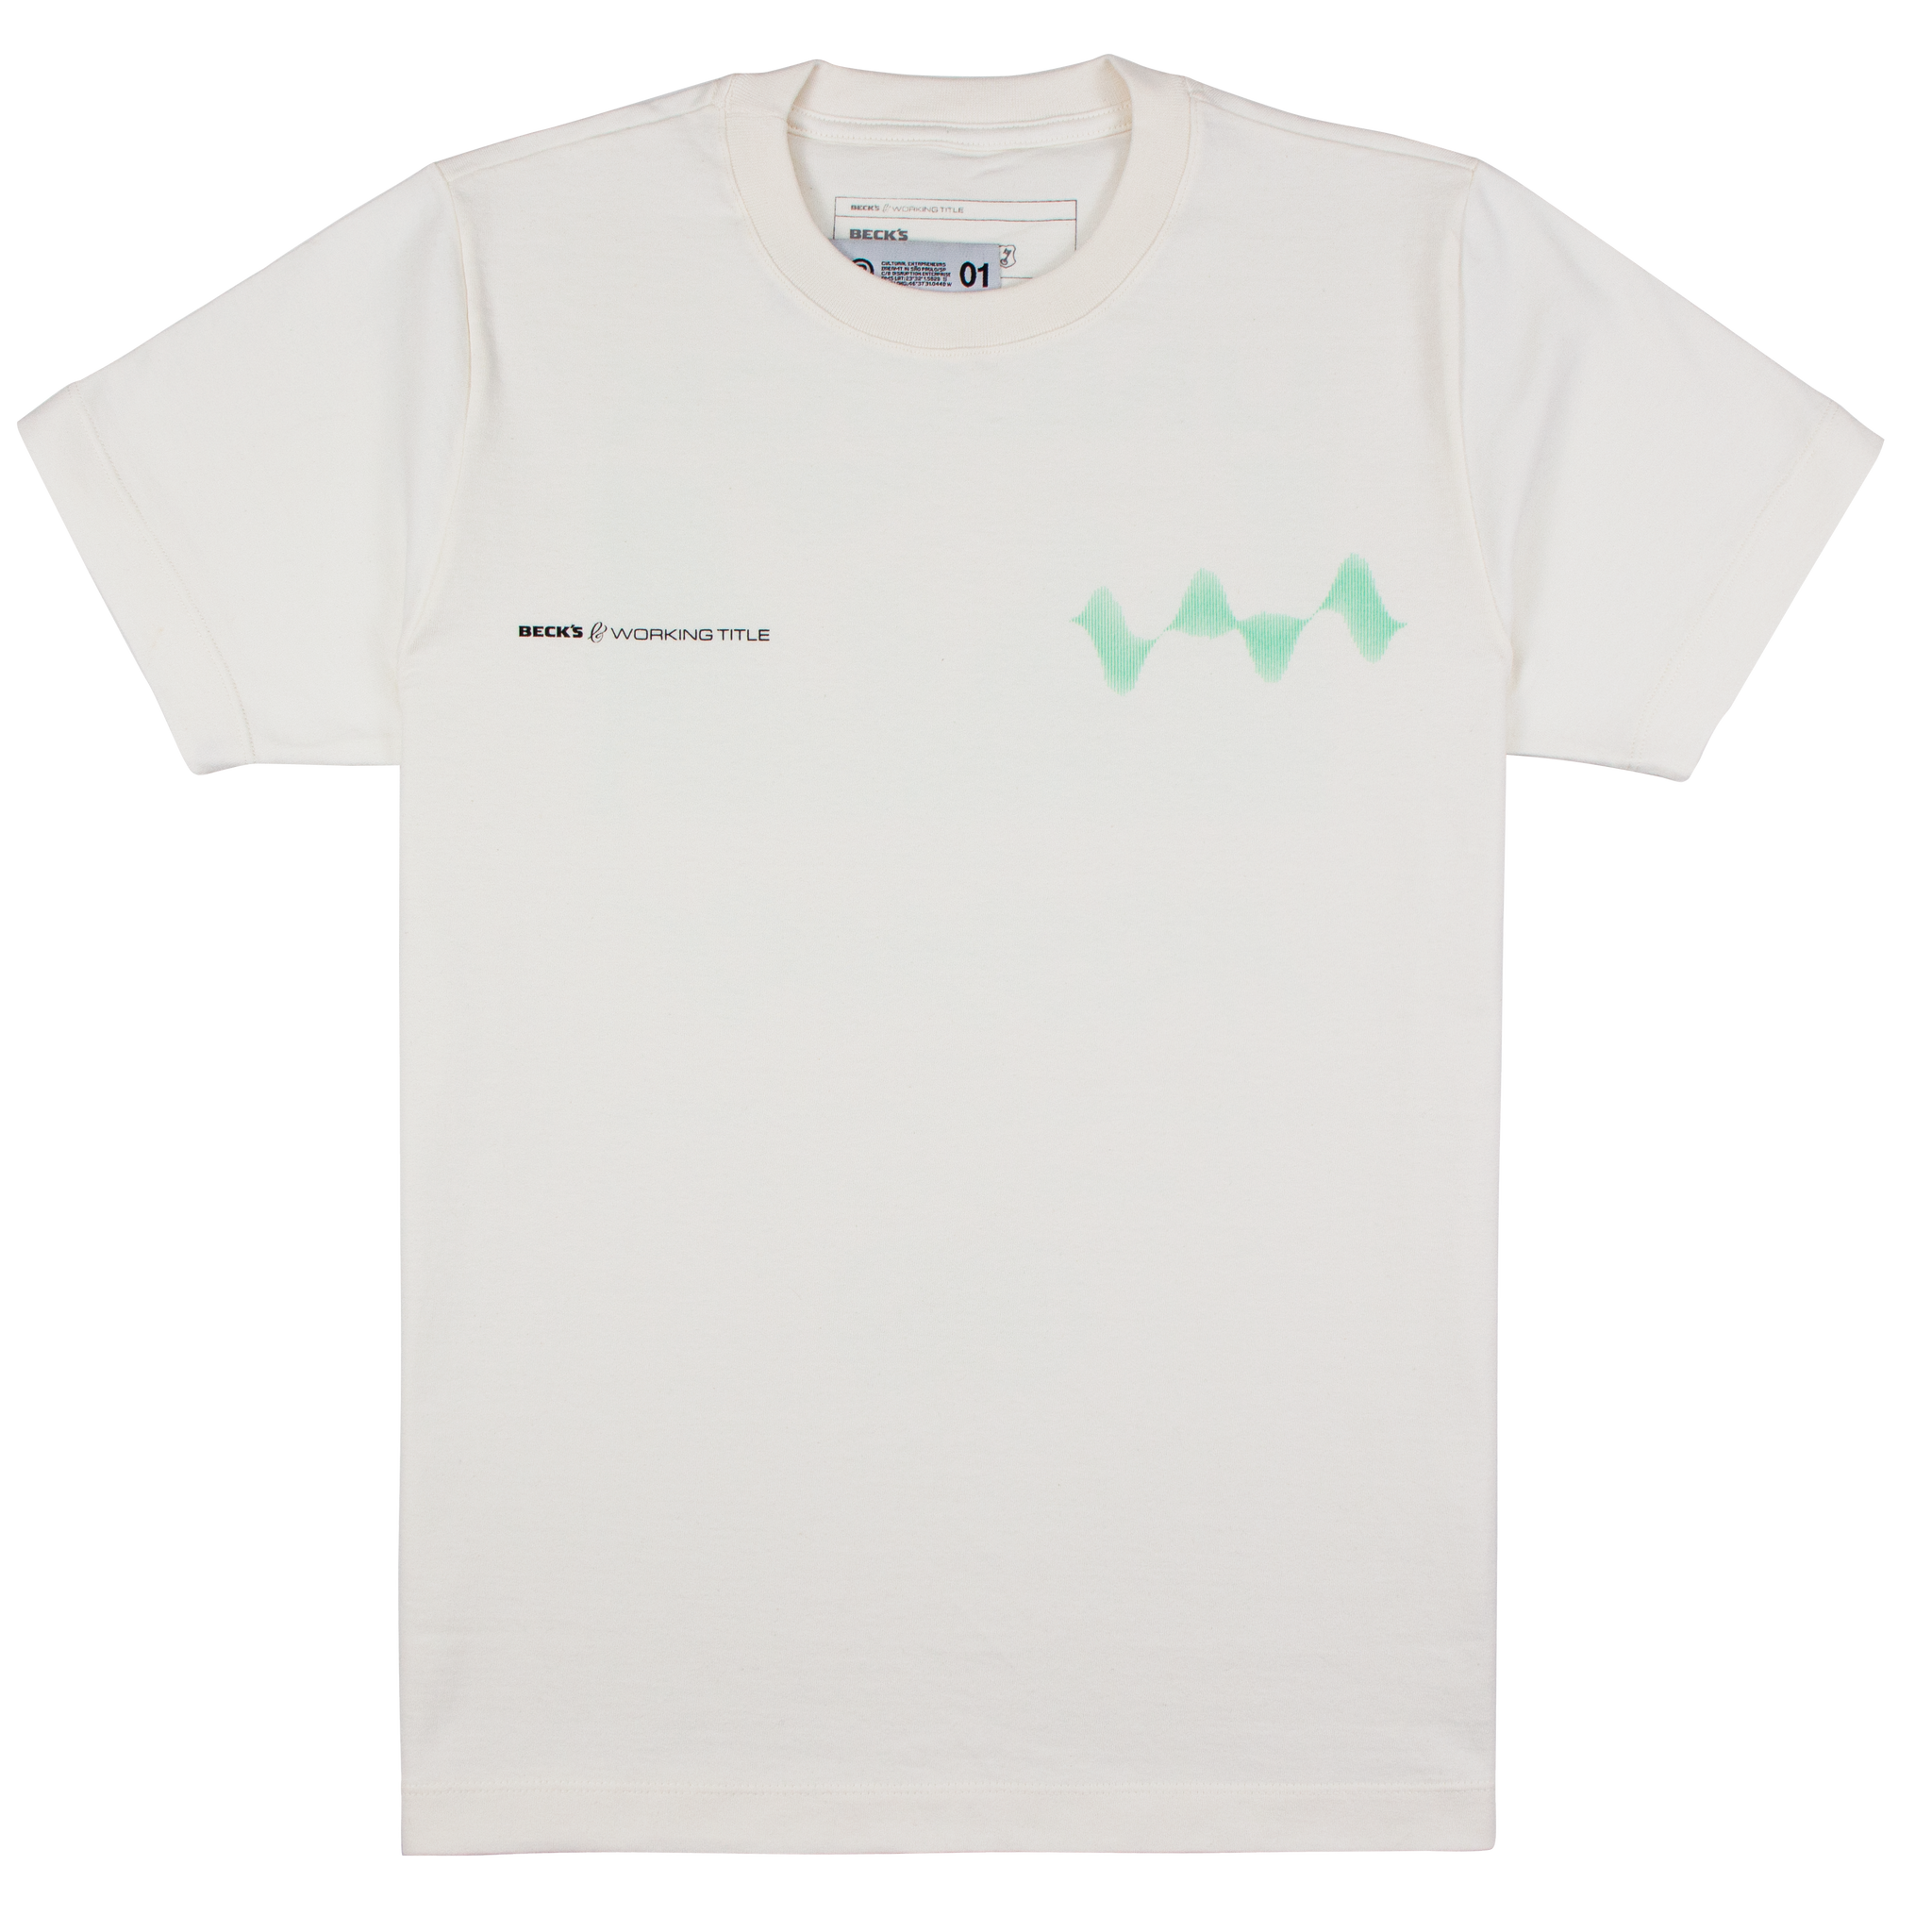 BECK'S x WORKING TITLE Camiseta Sound - Off White